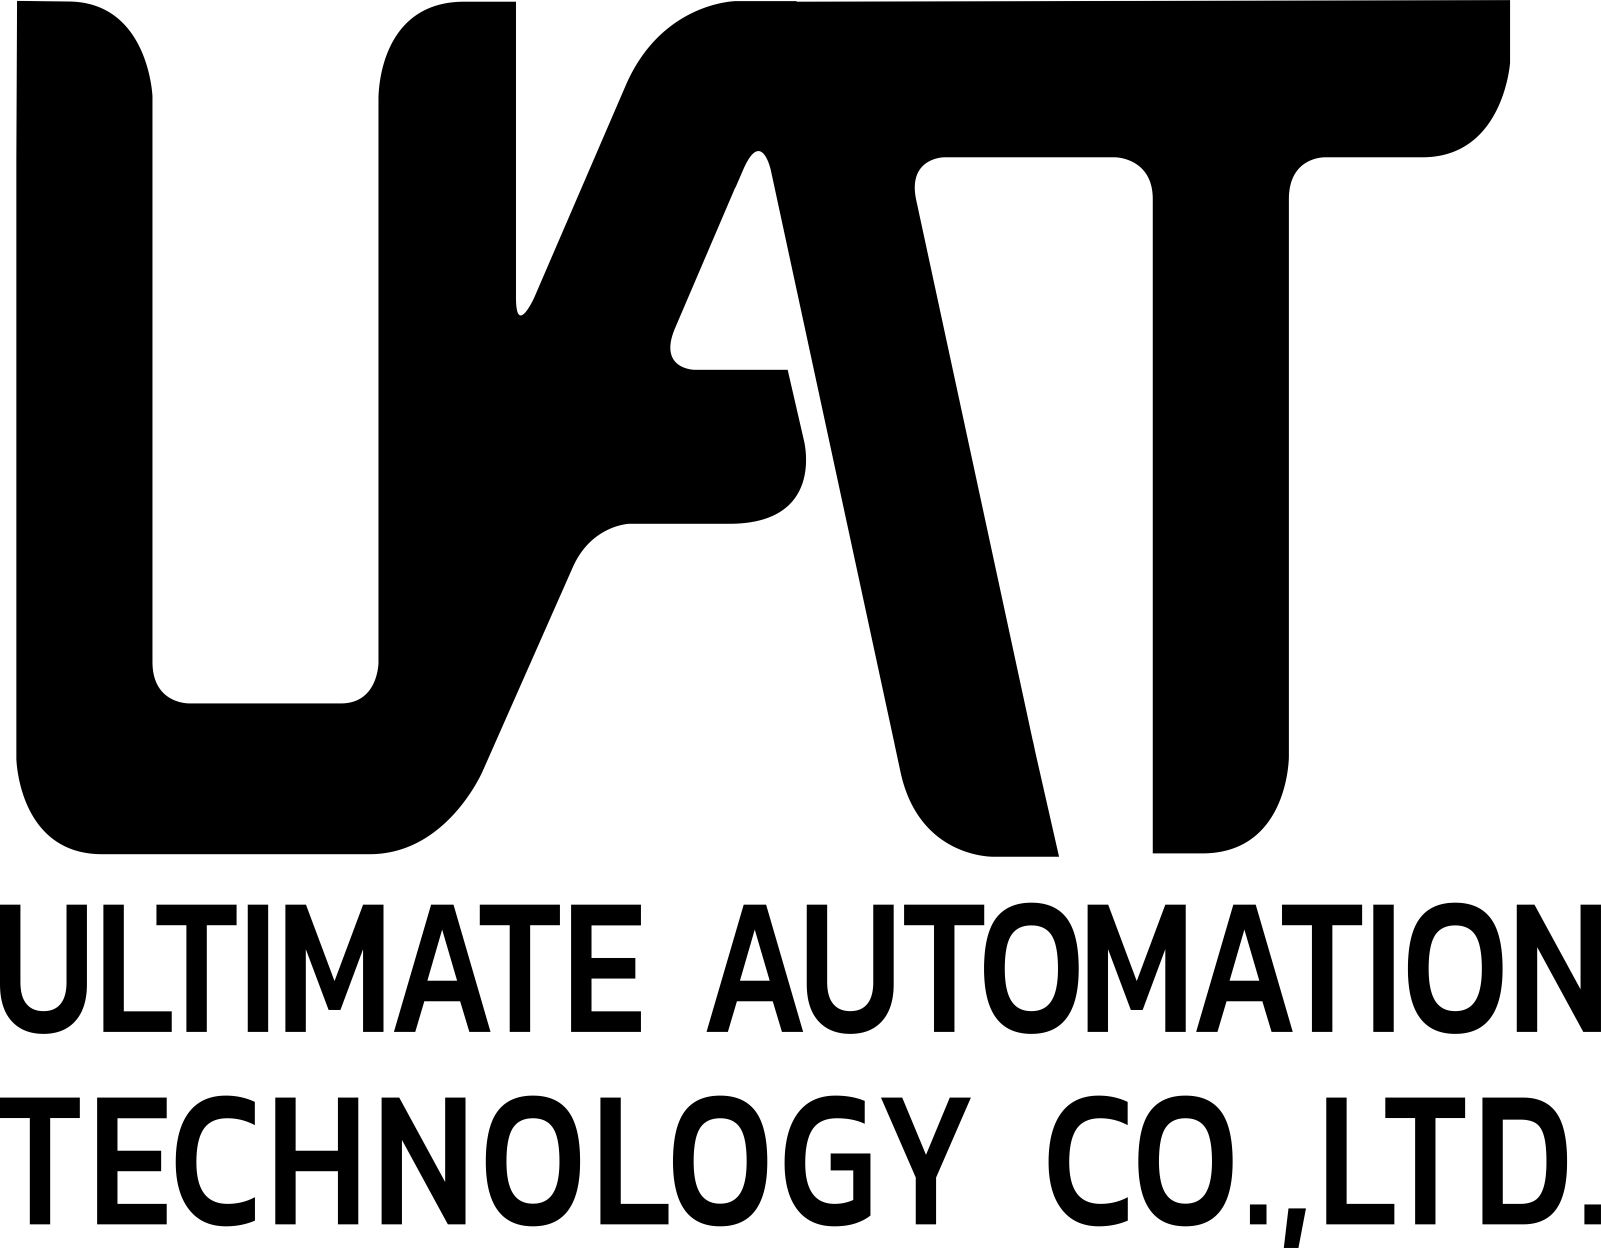 Ultimate Automation Technology Co.,Ltd., บริษัท อัลติเมท ออโตเมชัน เทคโนโลยี จำกัด